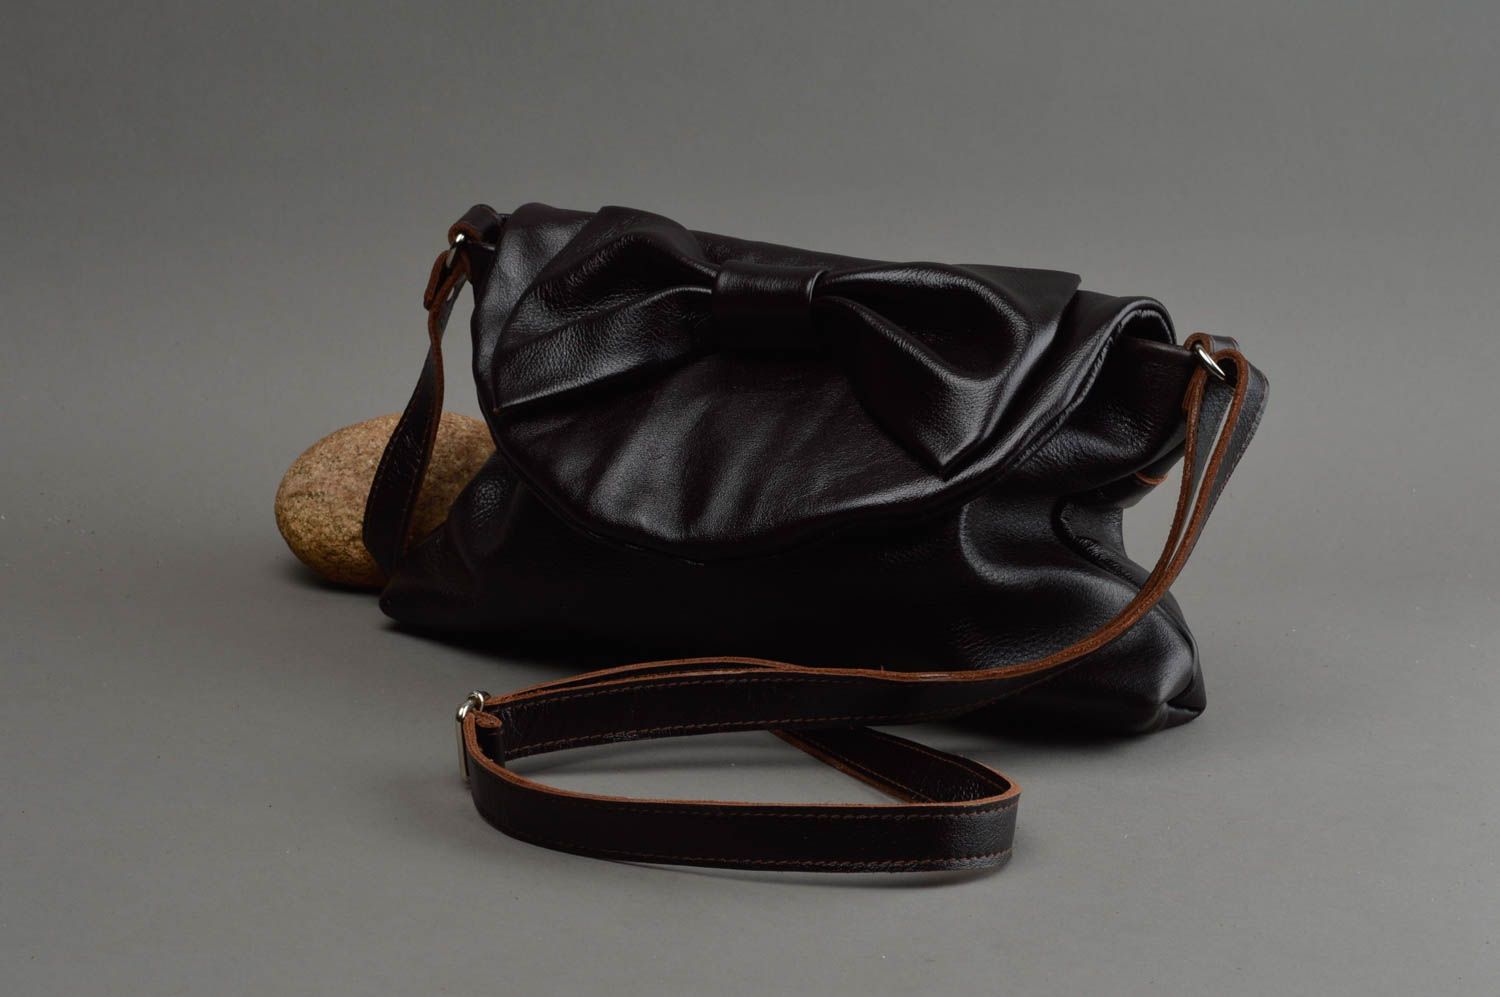 Beautiful handmade leather shoulder bag stylish bag for women leather goods photo 1